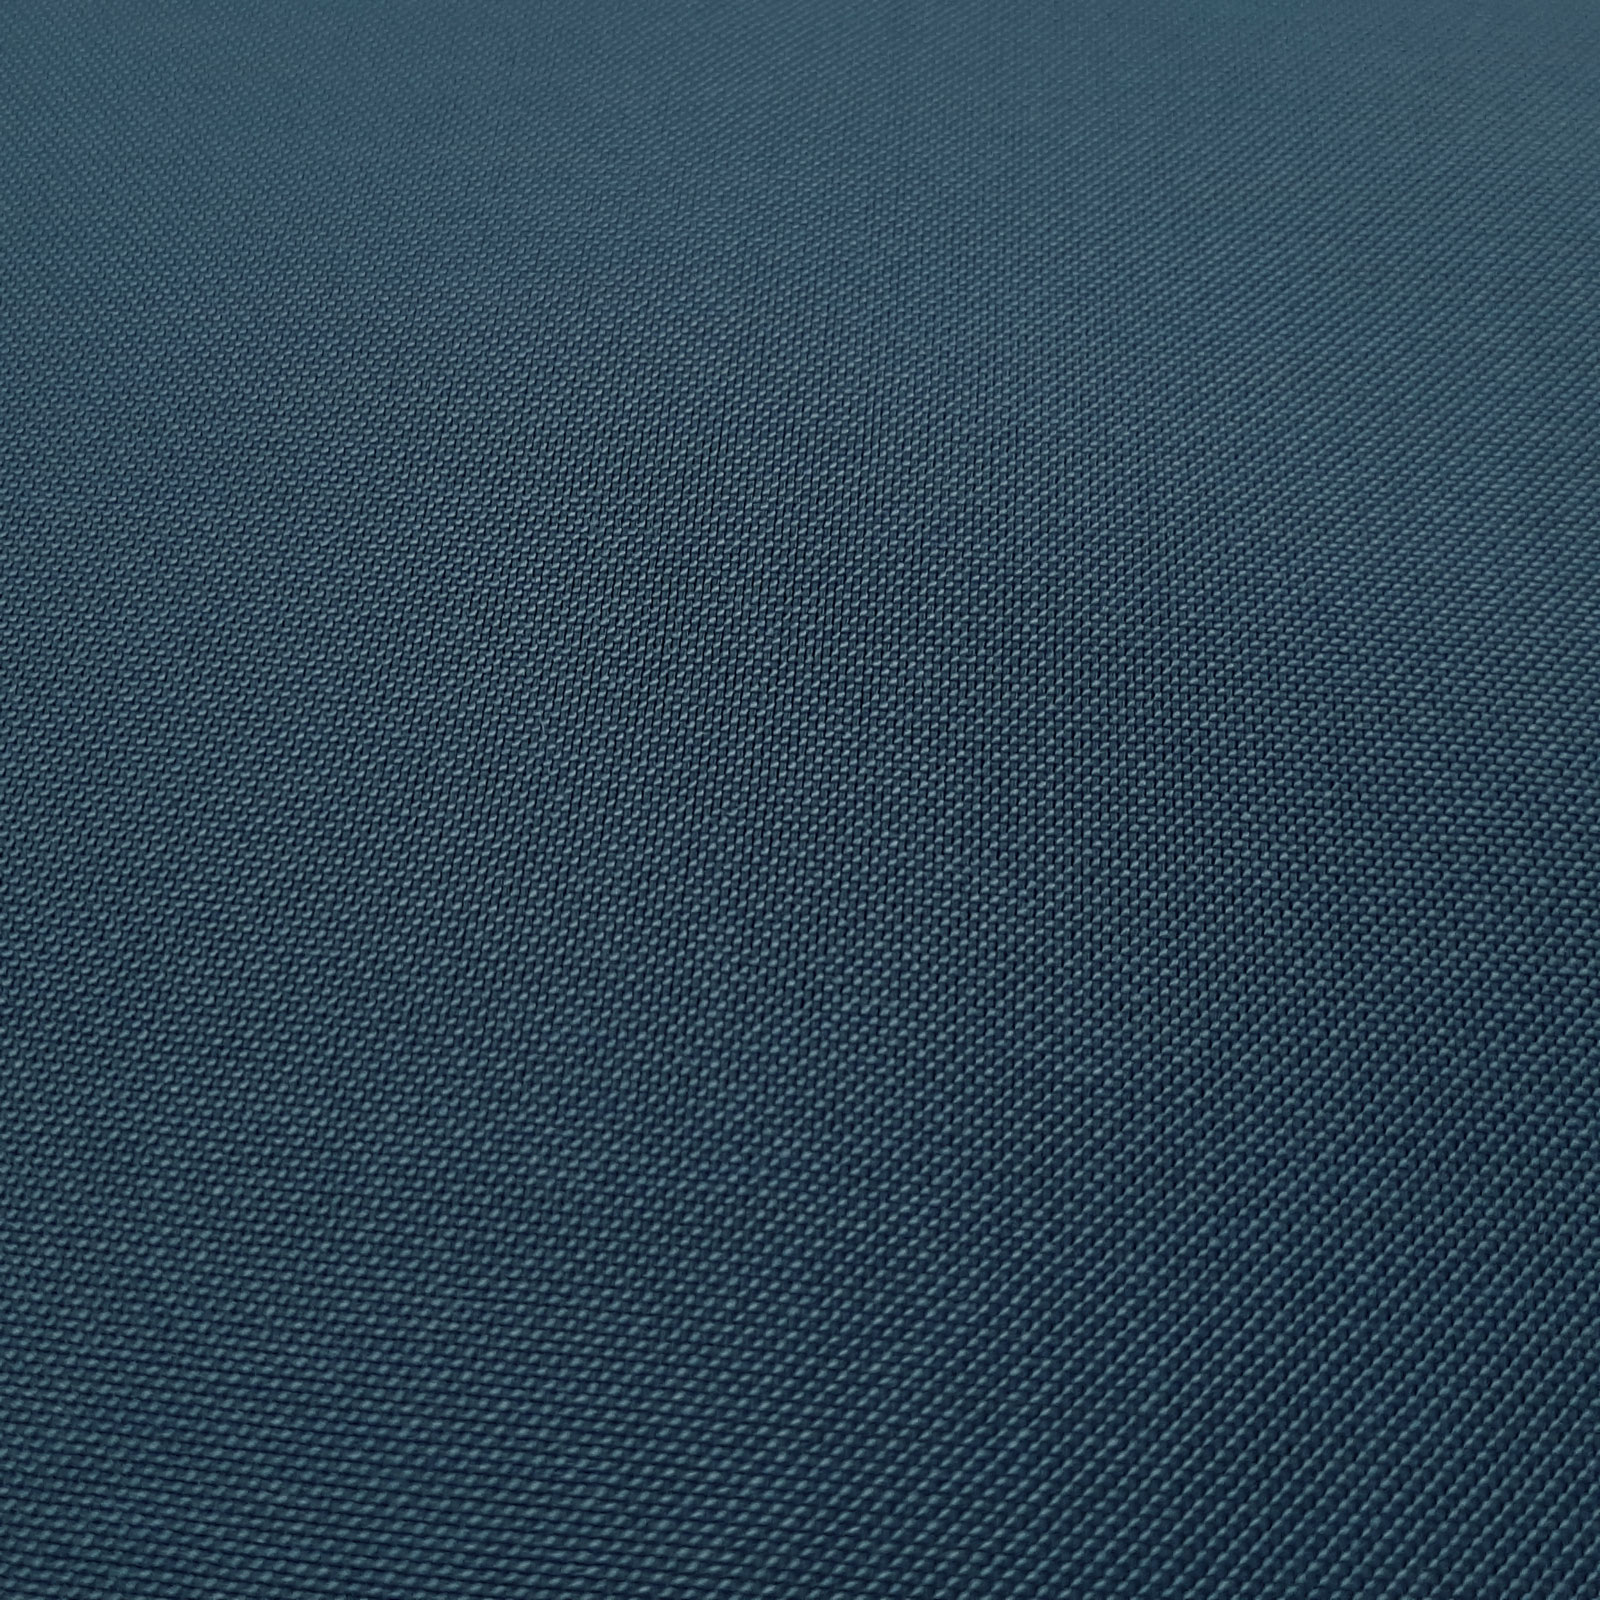 Zinos - tejido Cordura® robusto - Azul Oscuro